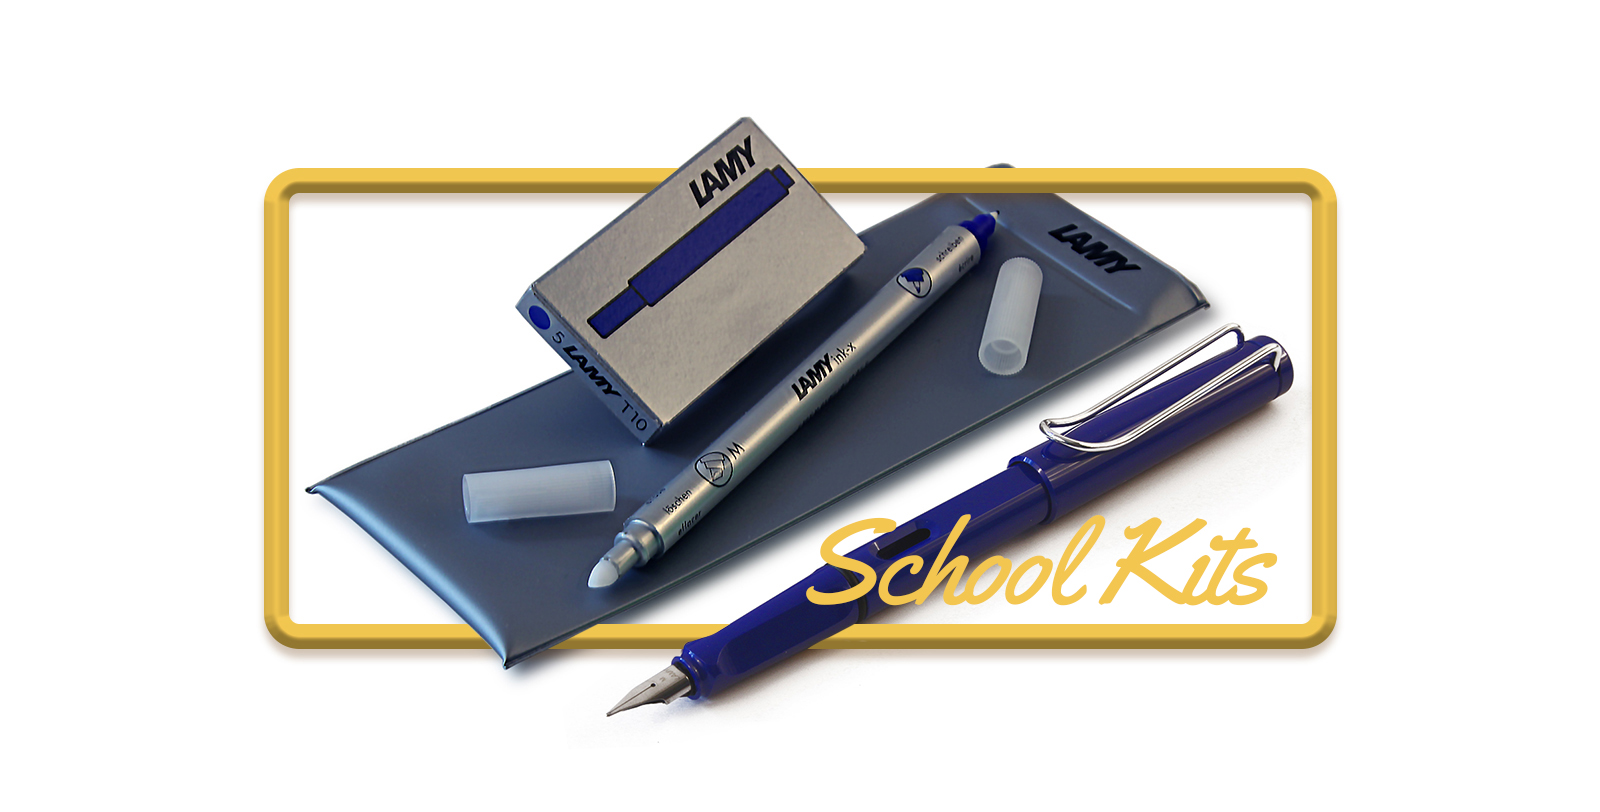 LAM_School_Kits